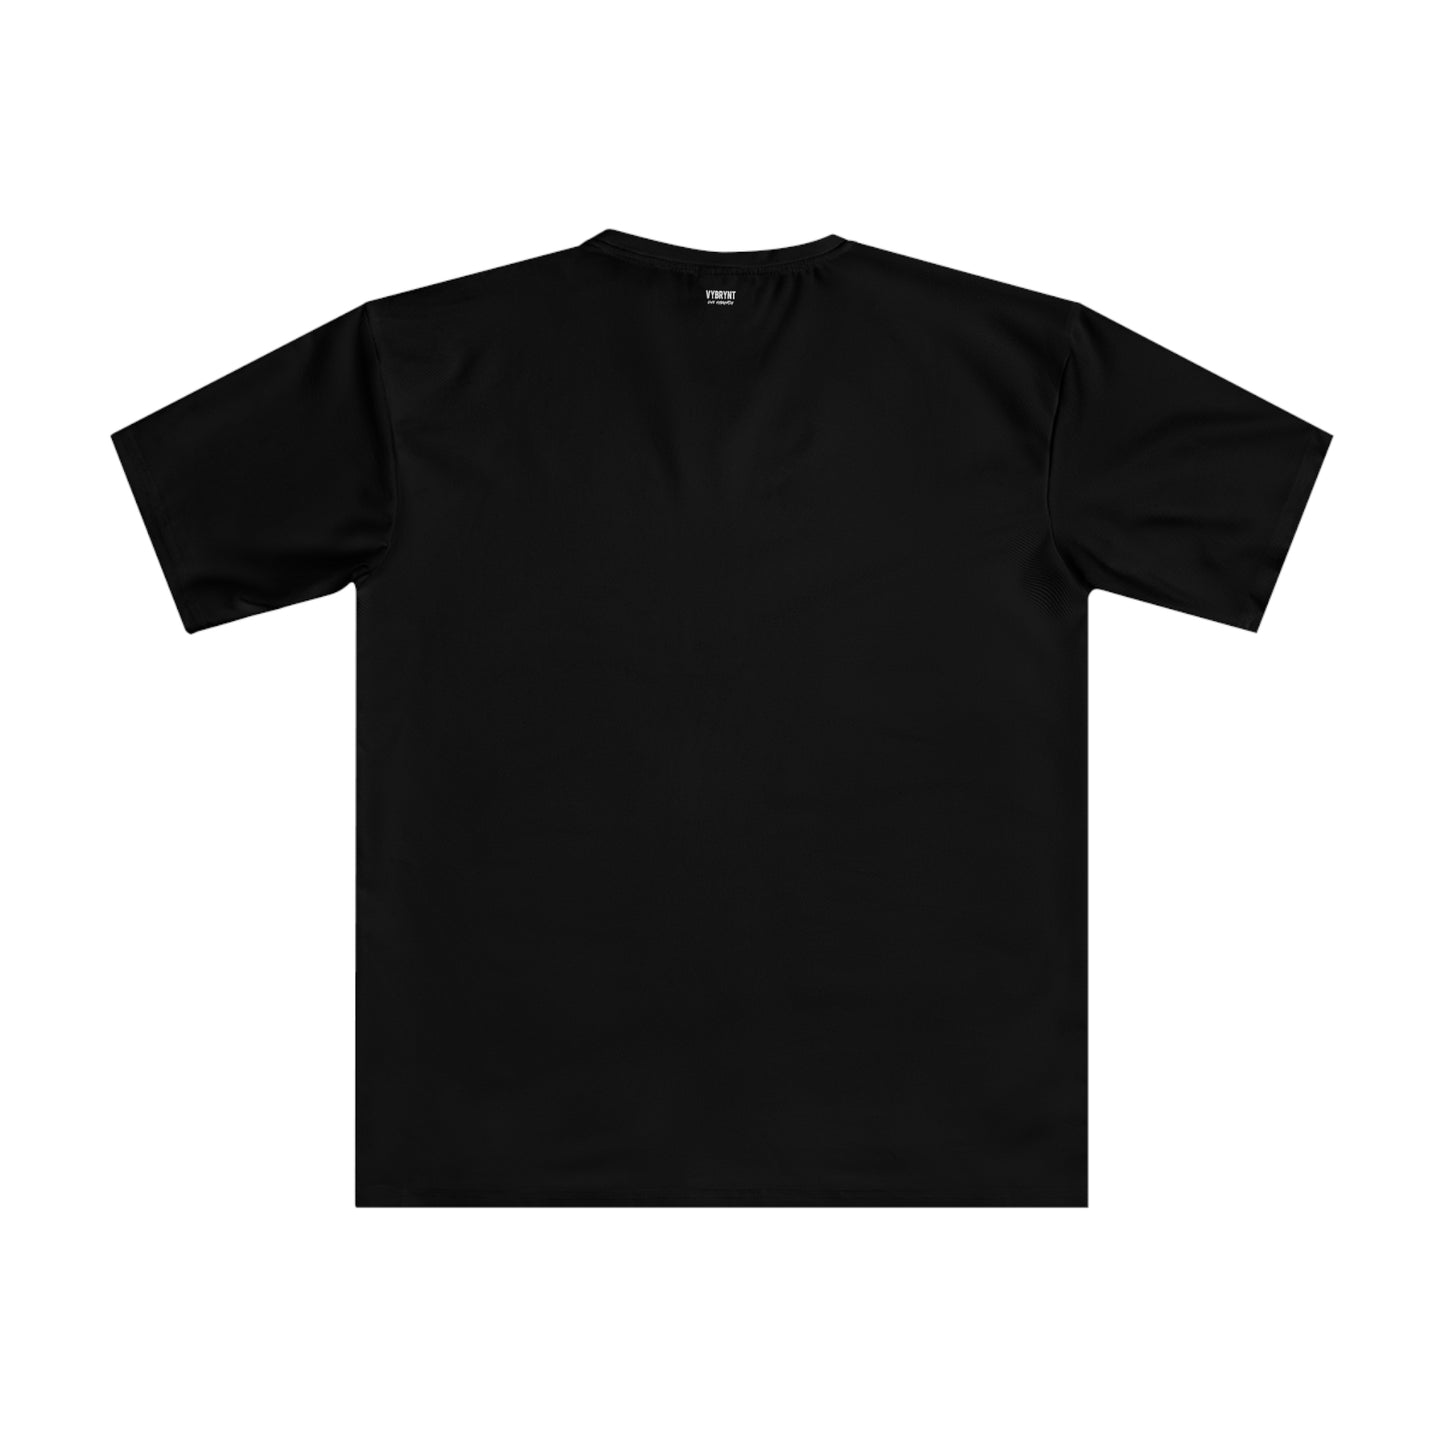 The World Famous Apollo Men's Black T-shirt